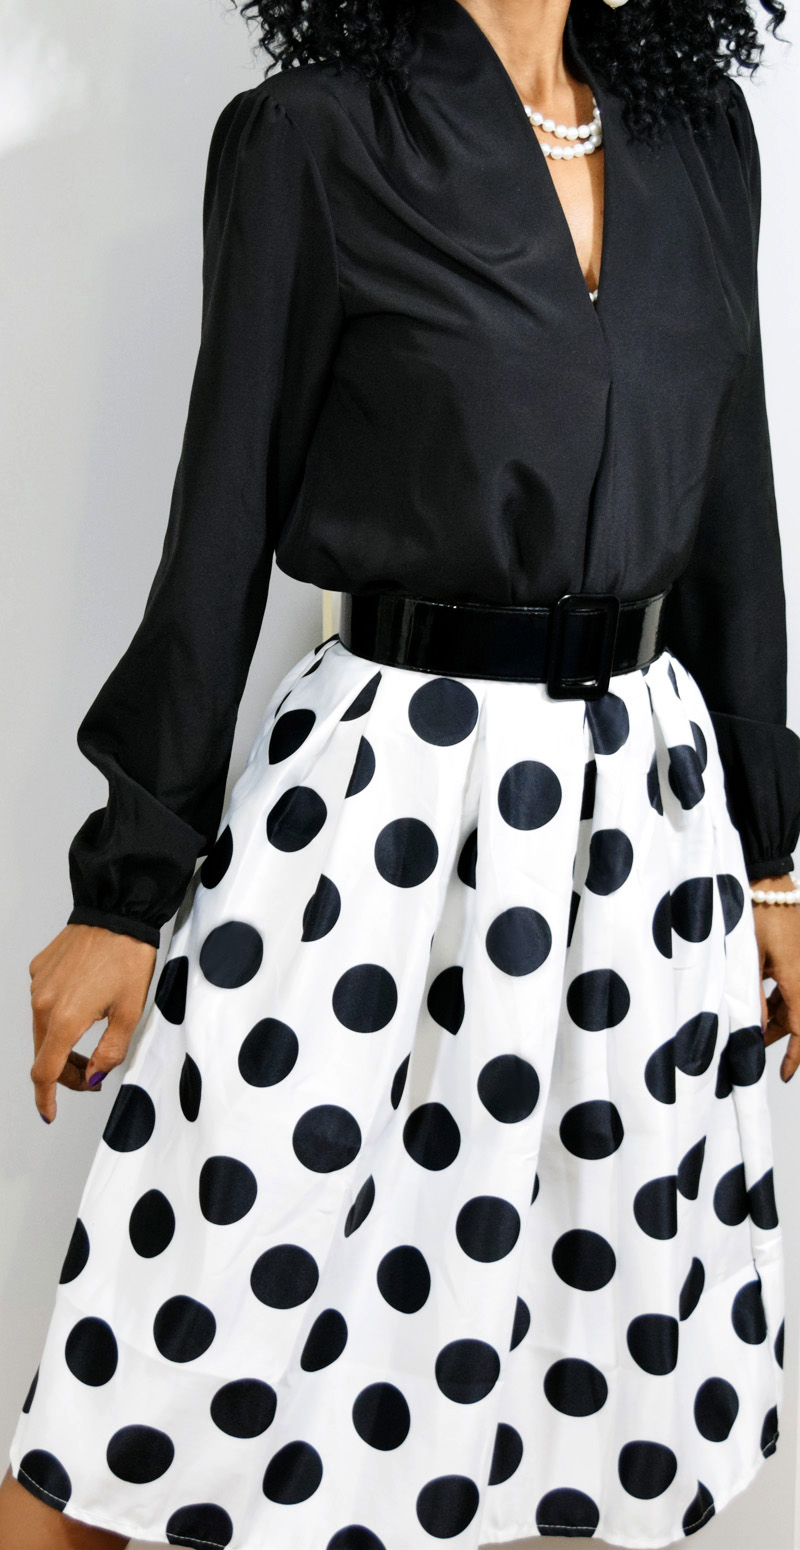 black and white polka dot skirt Michael Kors black blouse styling outfit idea